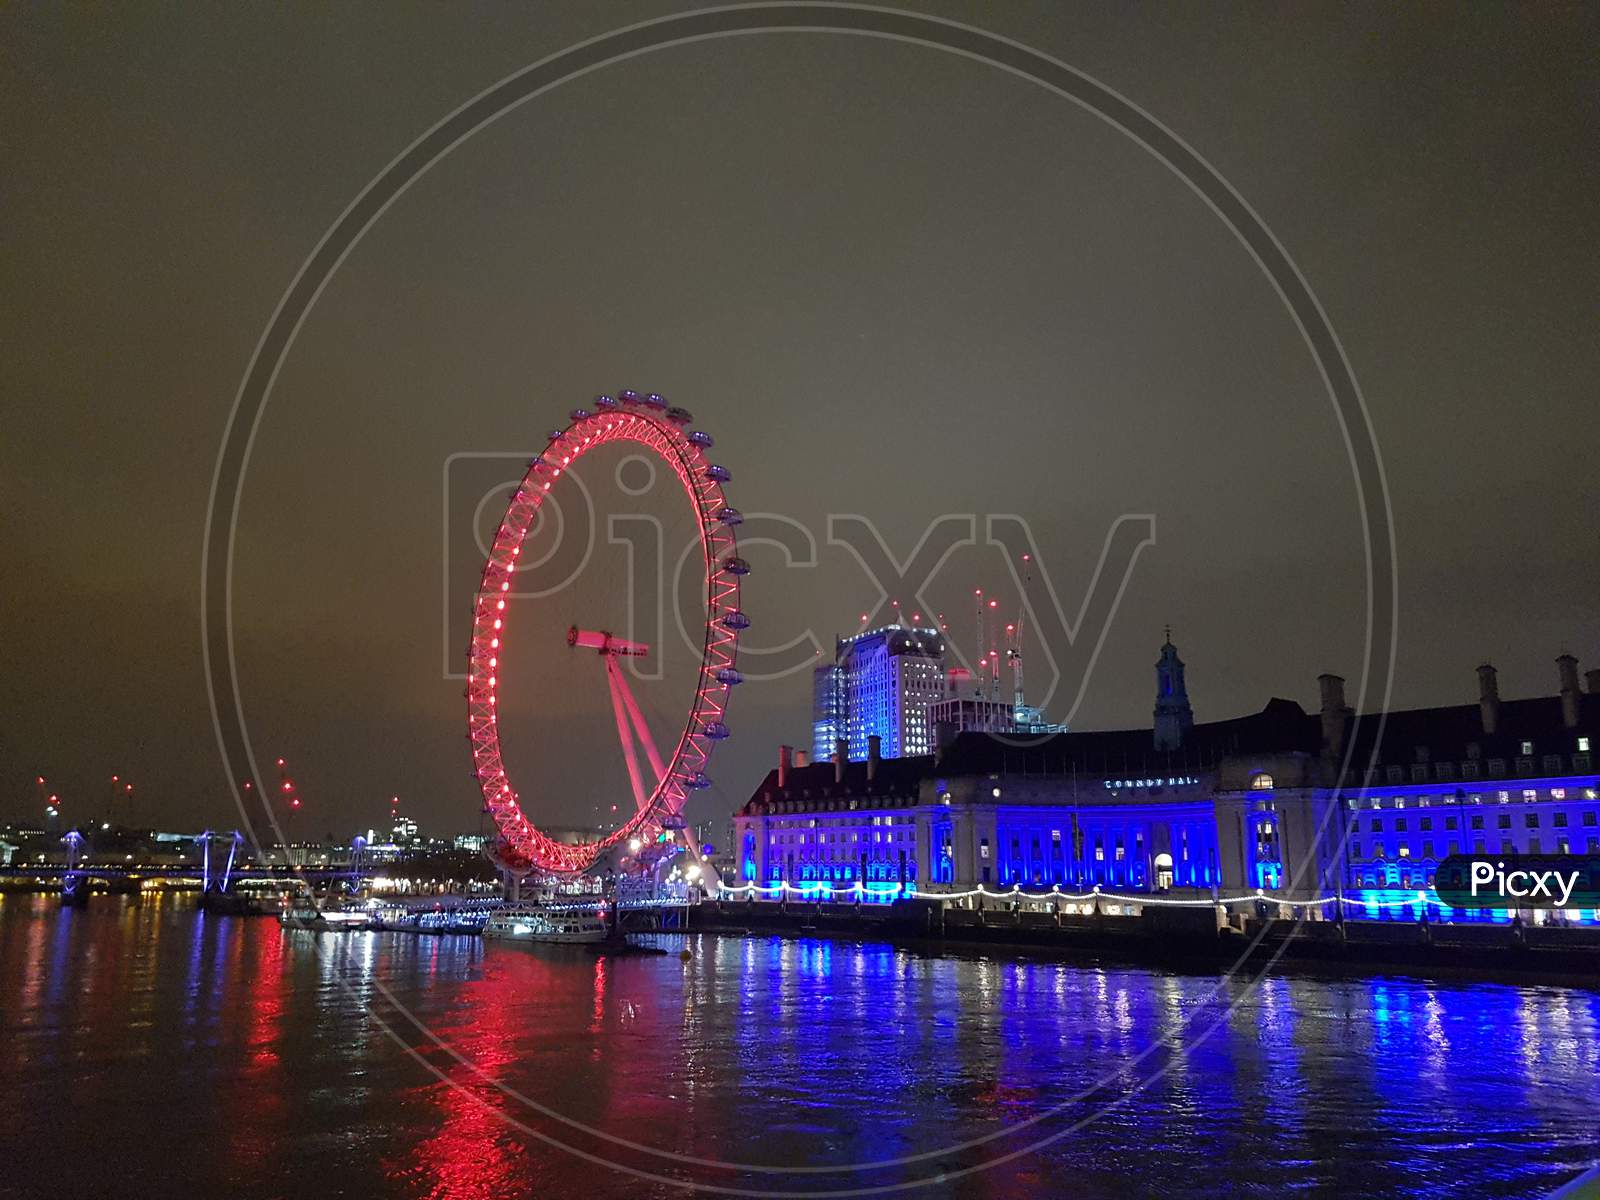 Night View of London eye Ferris wheel